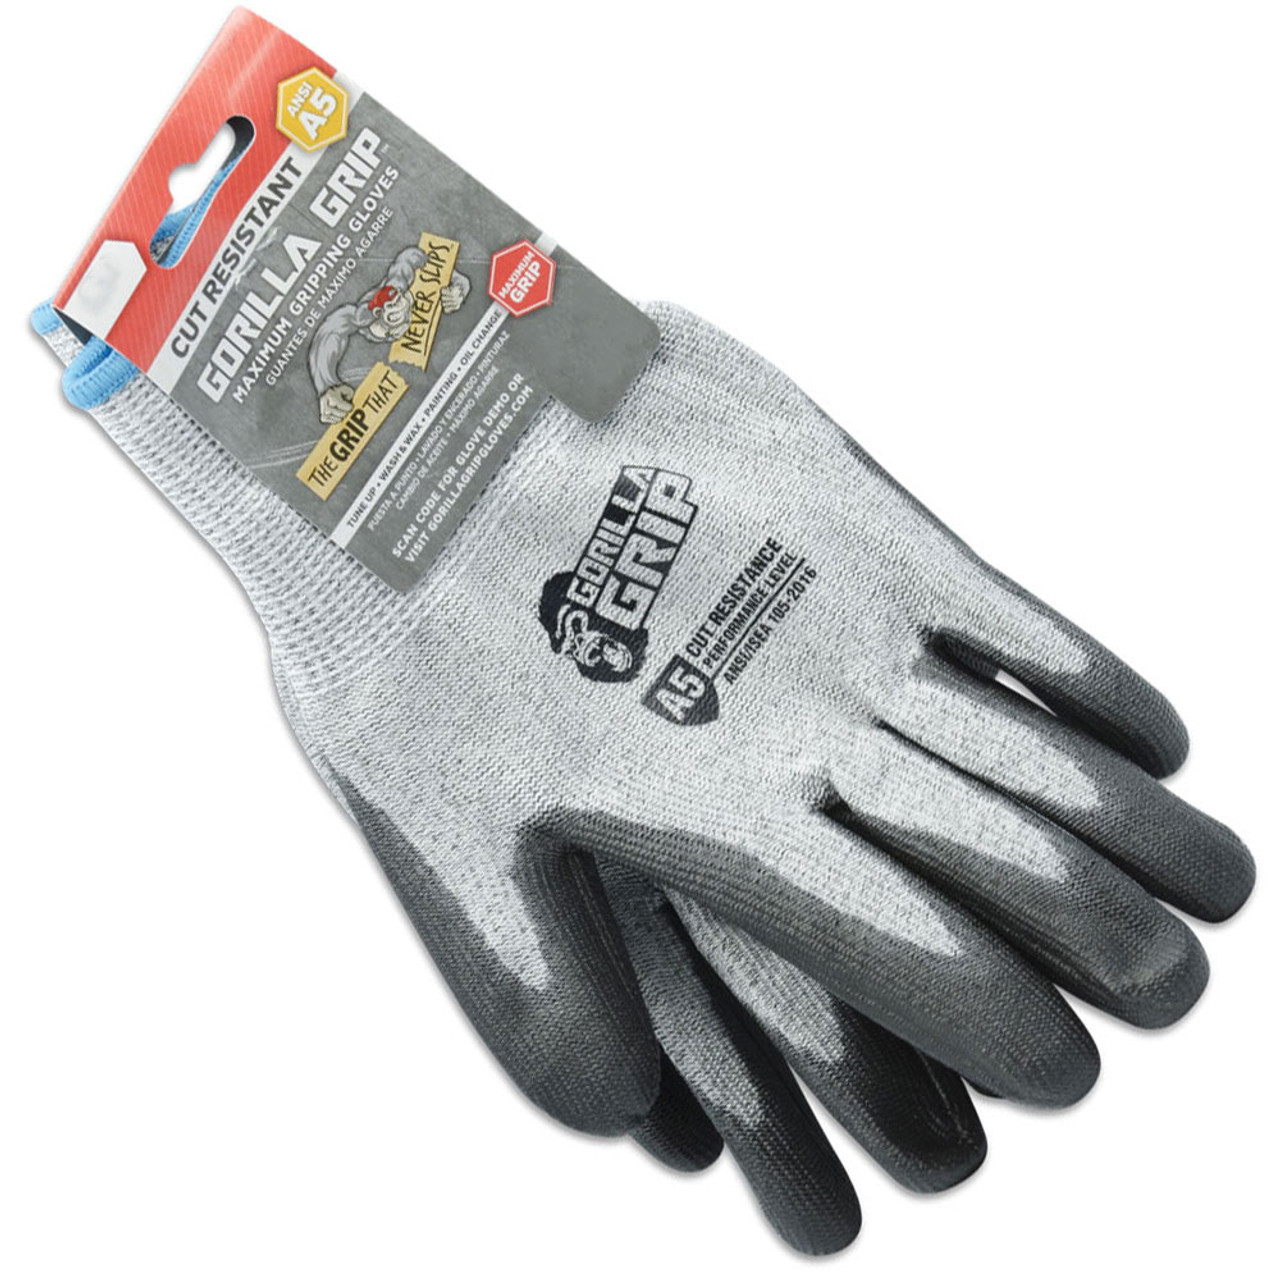 5 PACK Gorilla Grip Gloves - Medium 